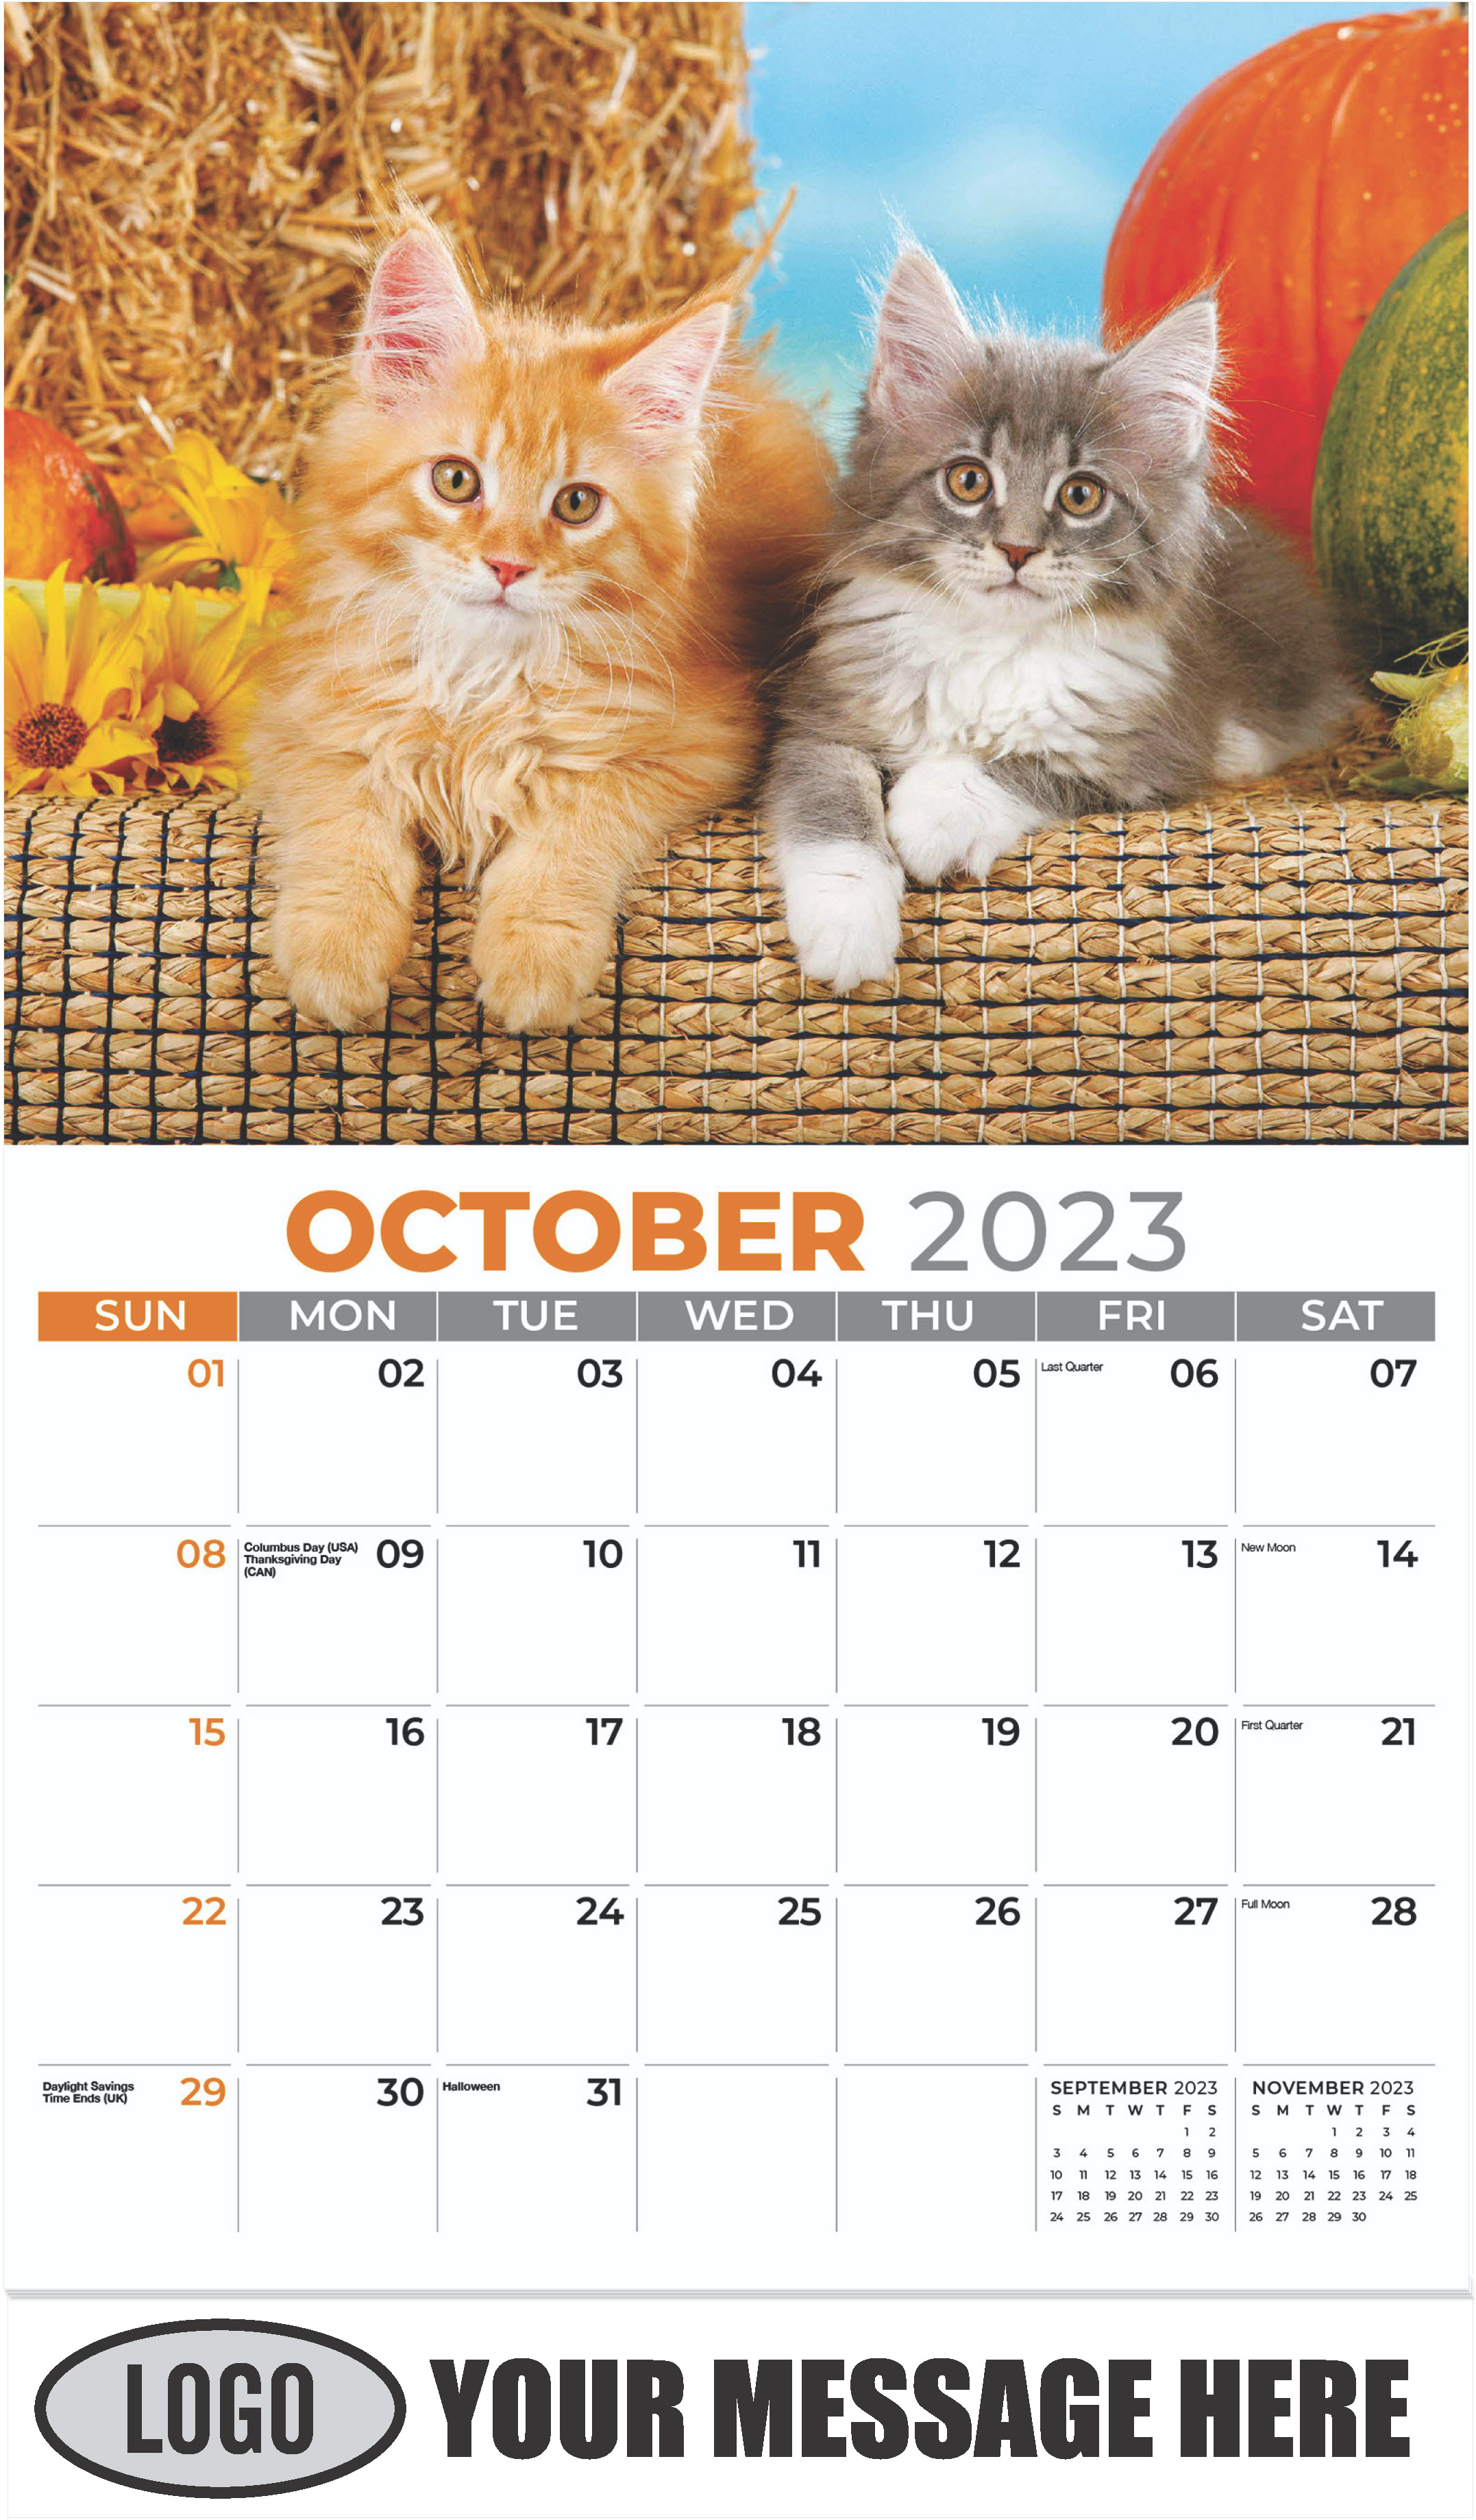 American Longhair & Maine Coon - October - Kittens 2023 Promotional Calendar